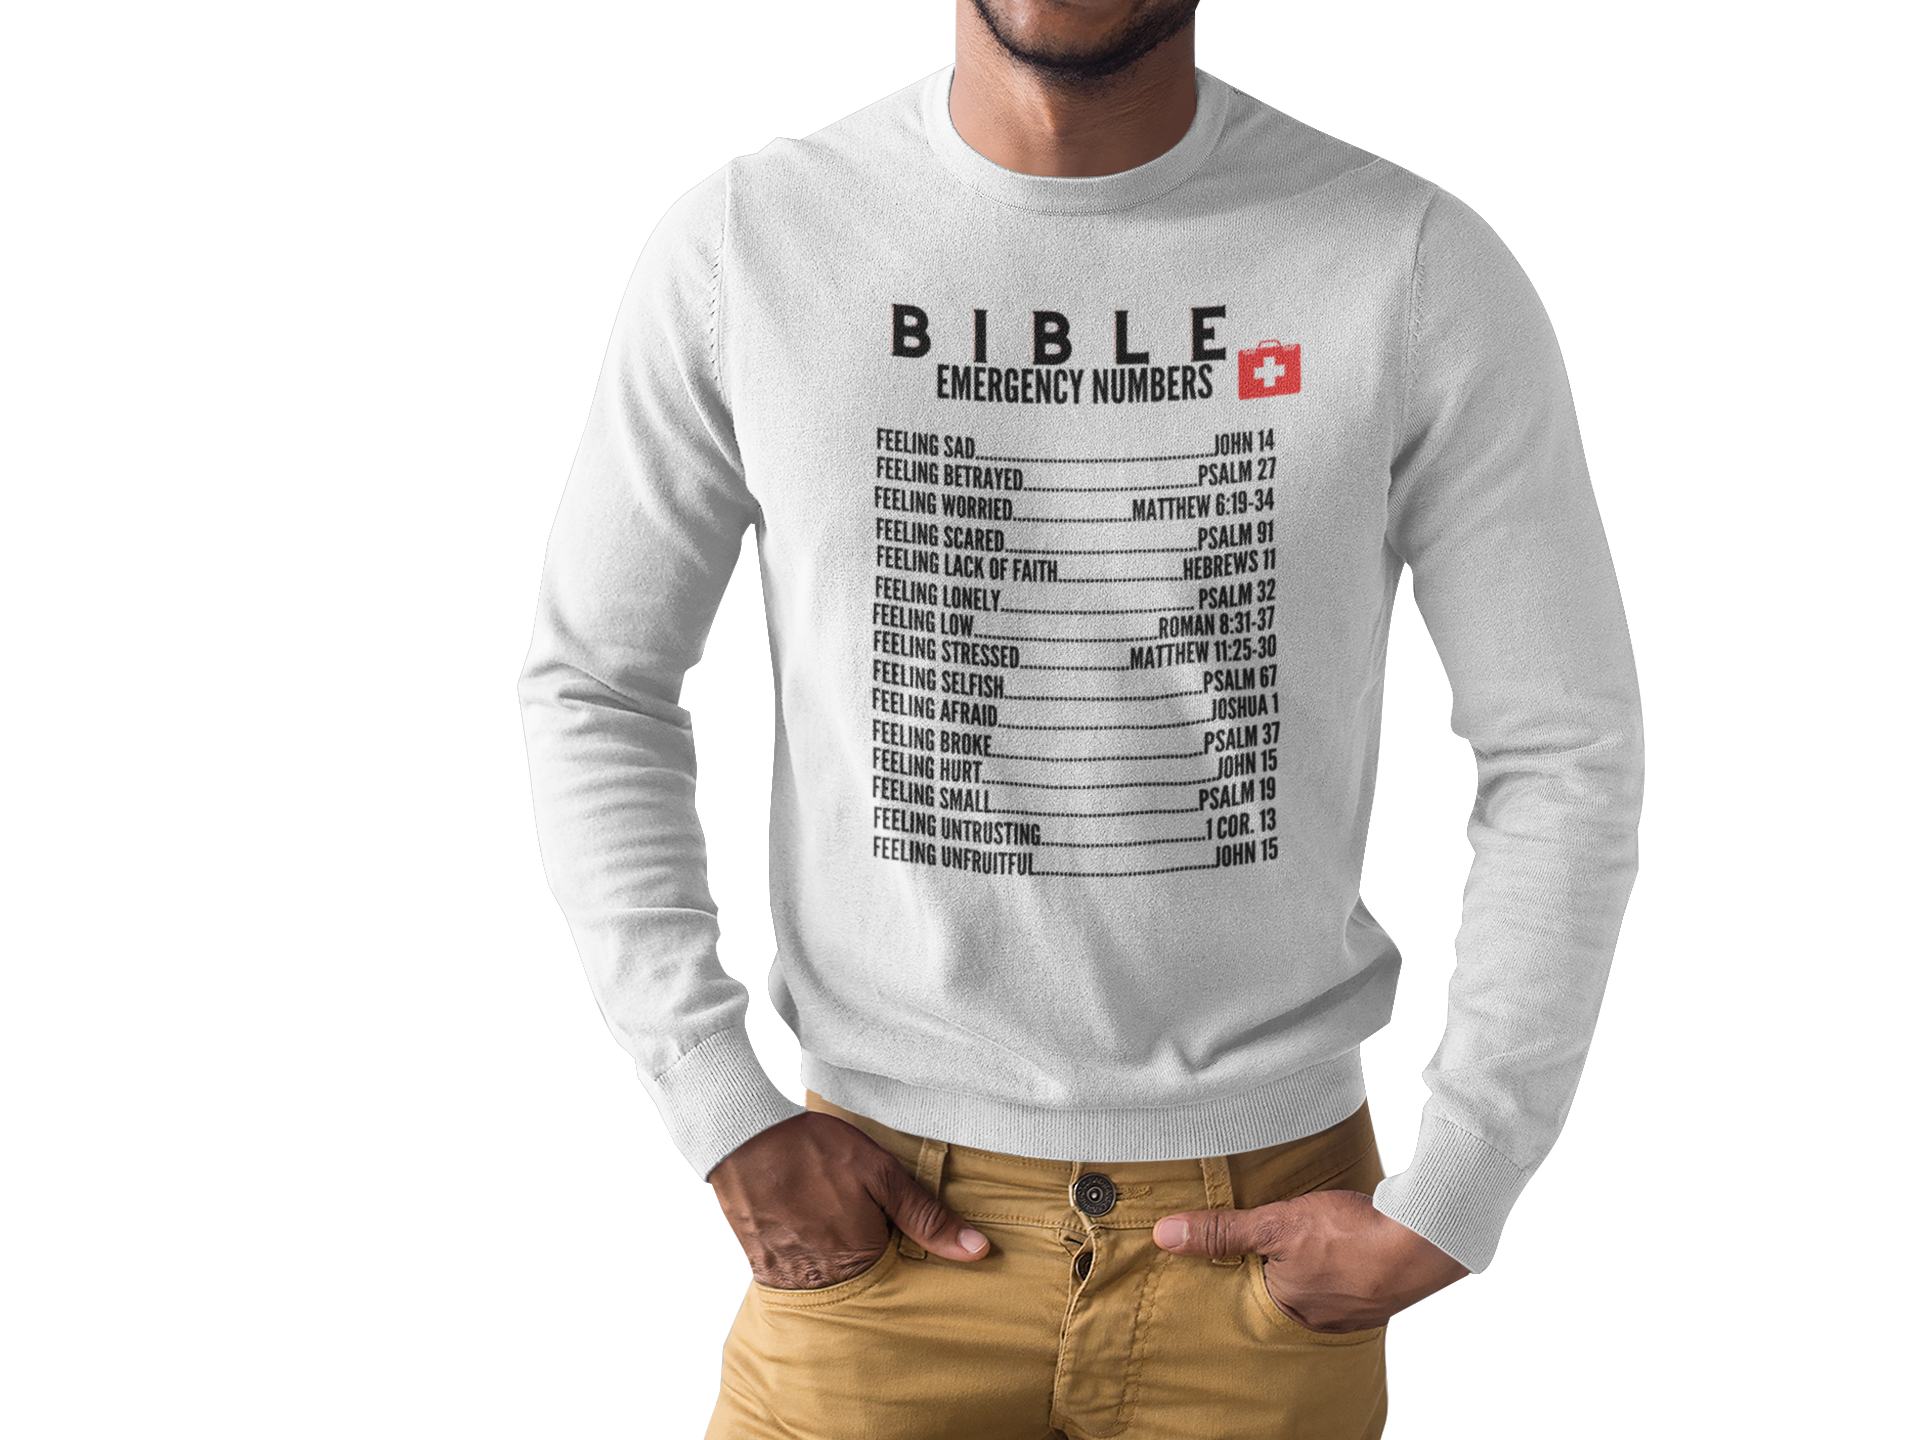 Emergency Bible Numbers Long Sleeve Shirt - Black